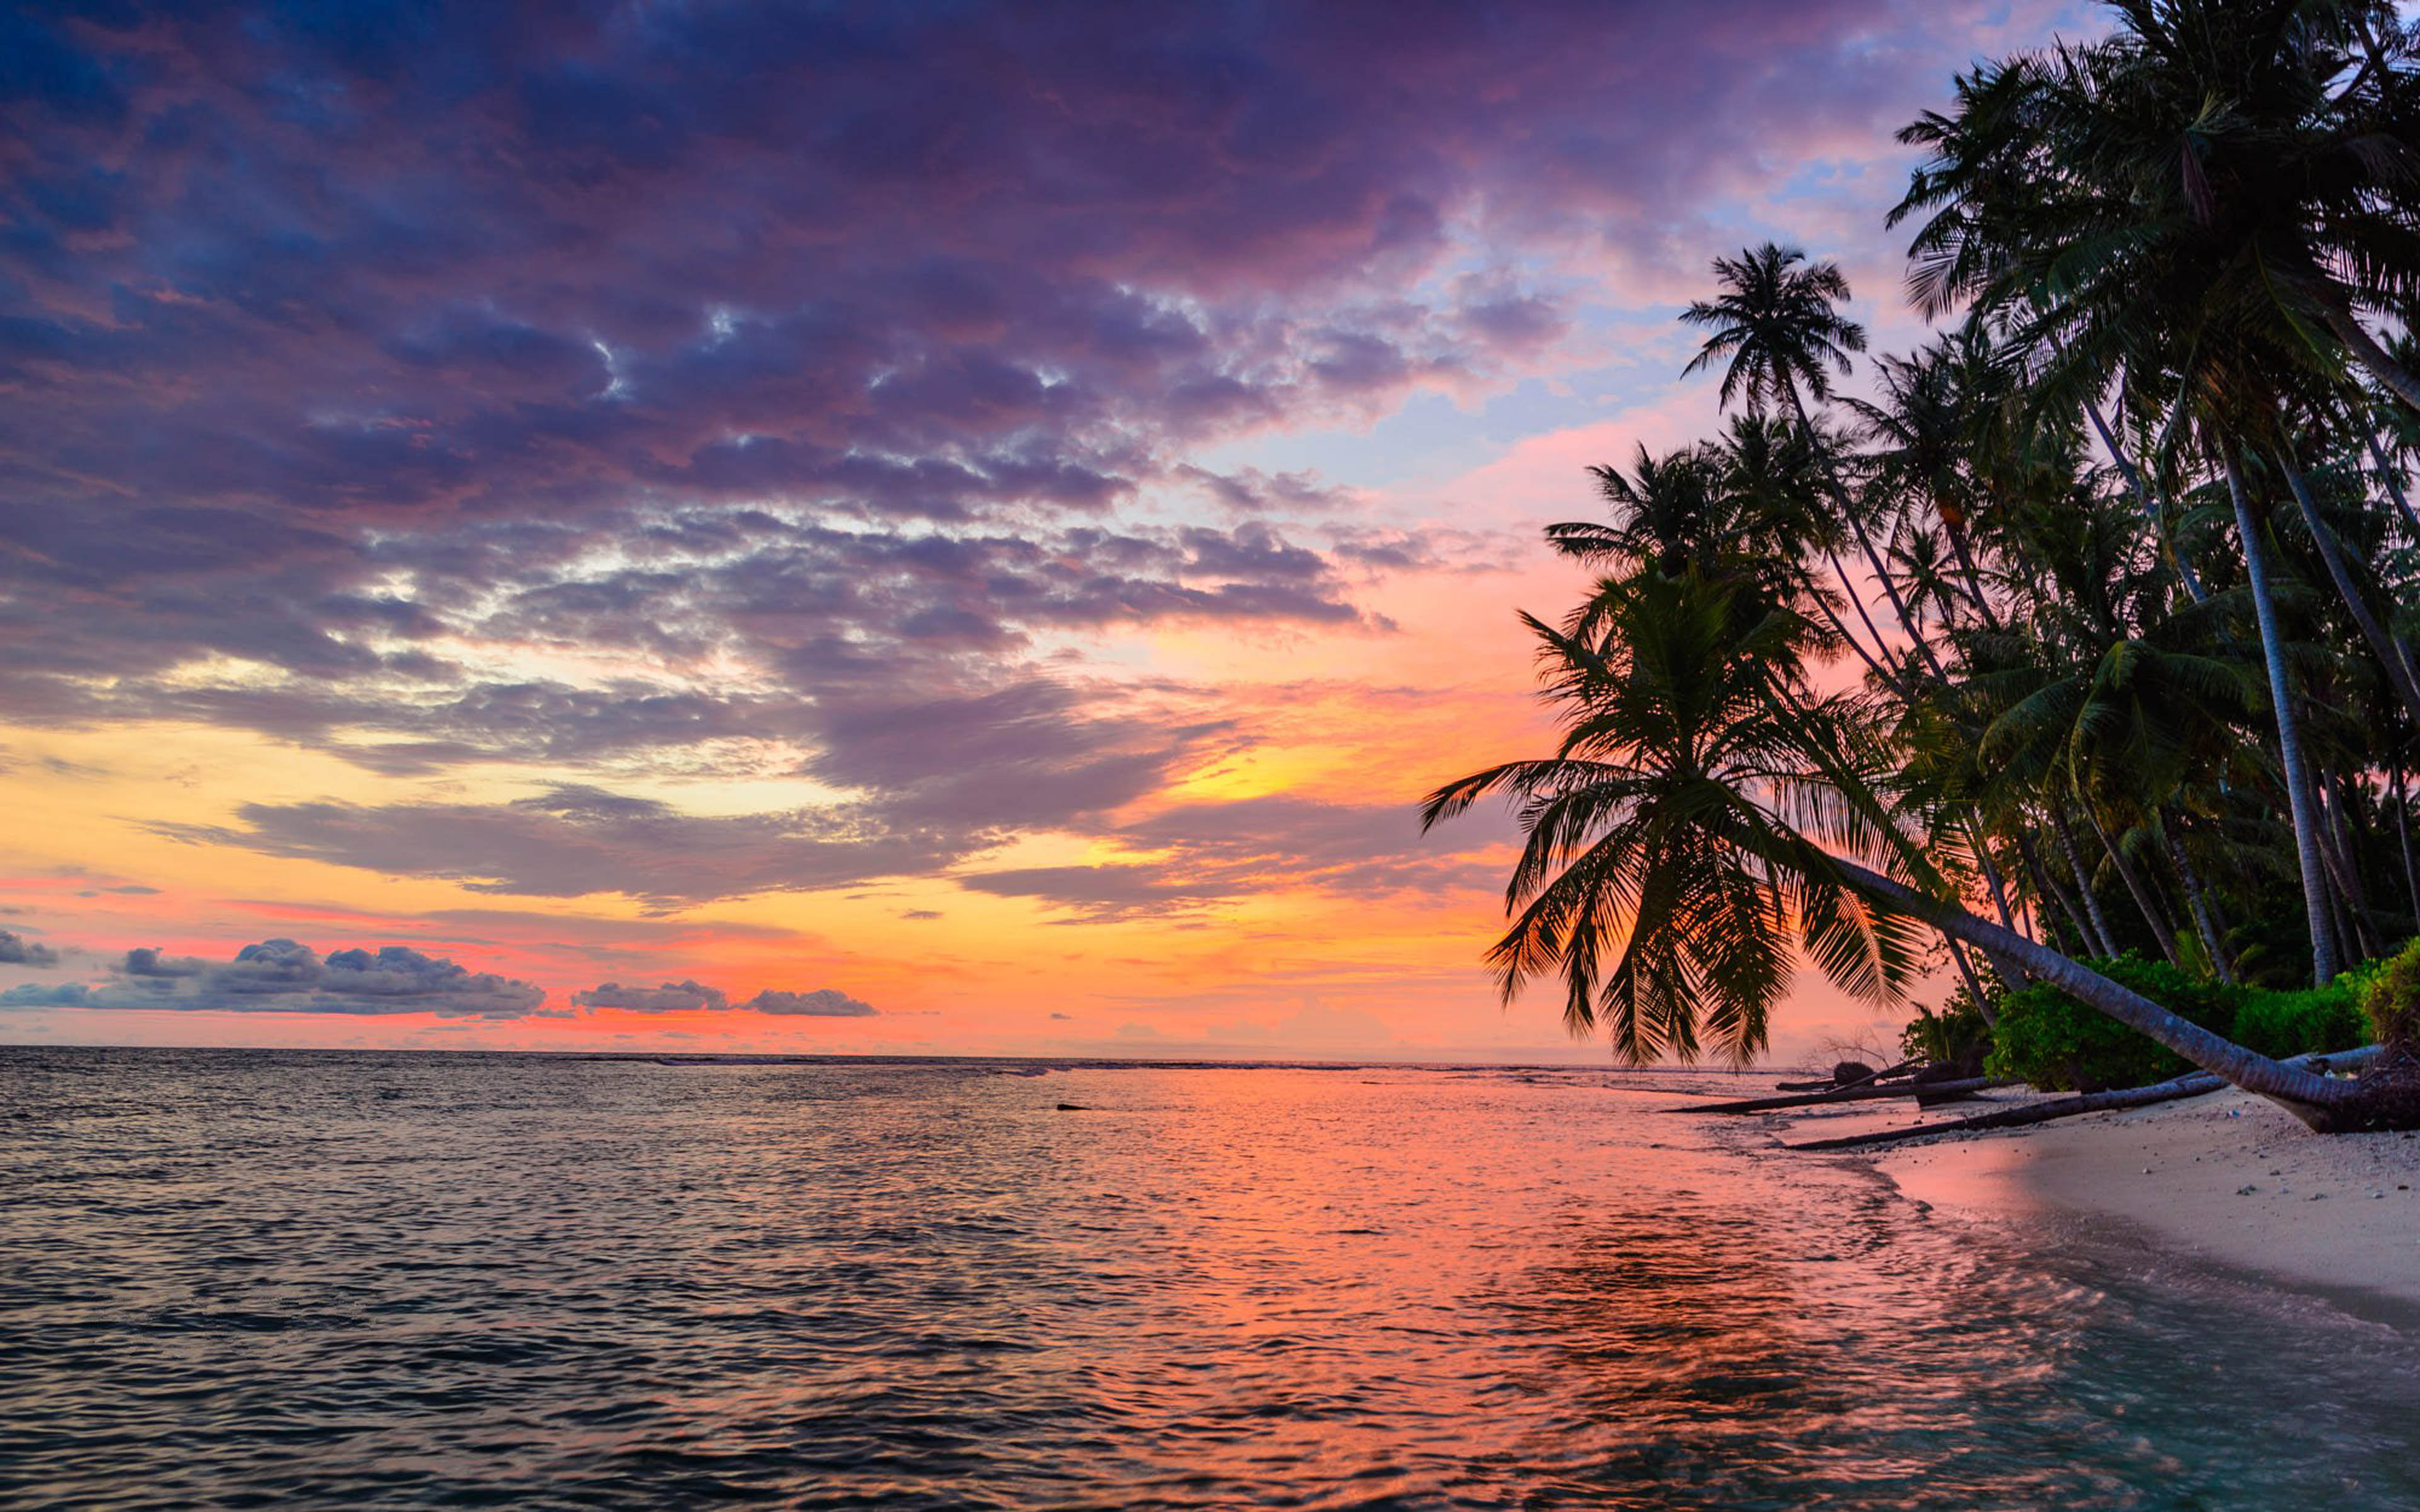 Indonesia Banyak Islands Sumatra Tropical Desert Beach Sunset Sky Sea Palm  Trees Photo Landscape 4k Ultra Hd Wallpaper For Desktop Laptop :  